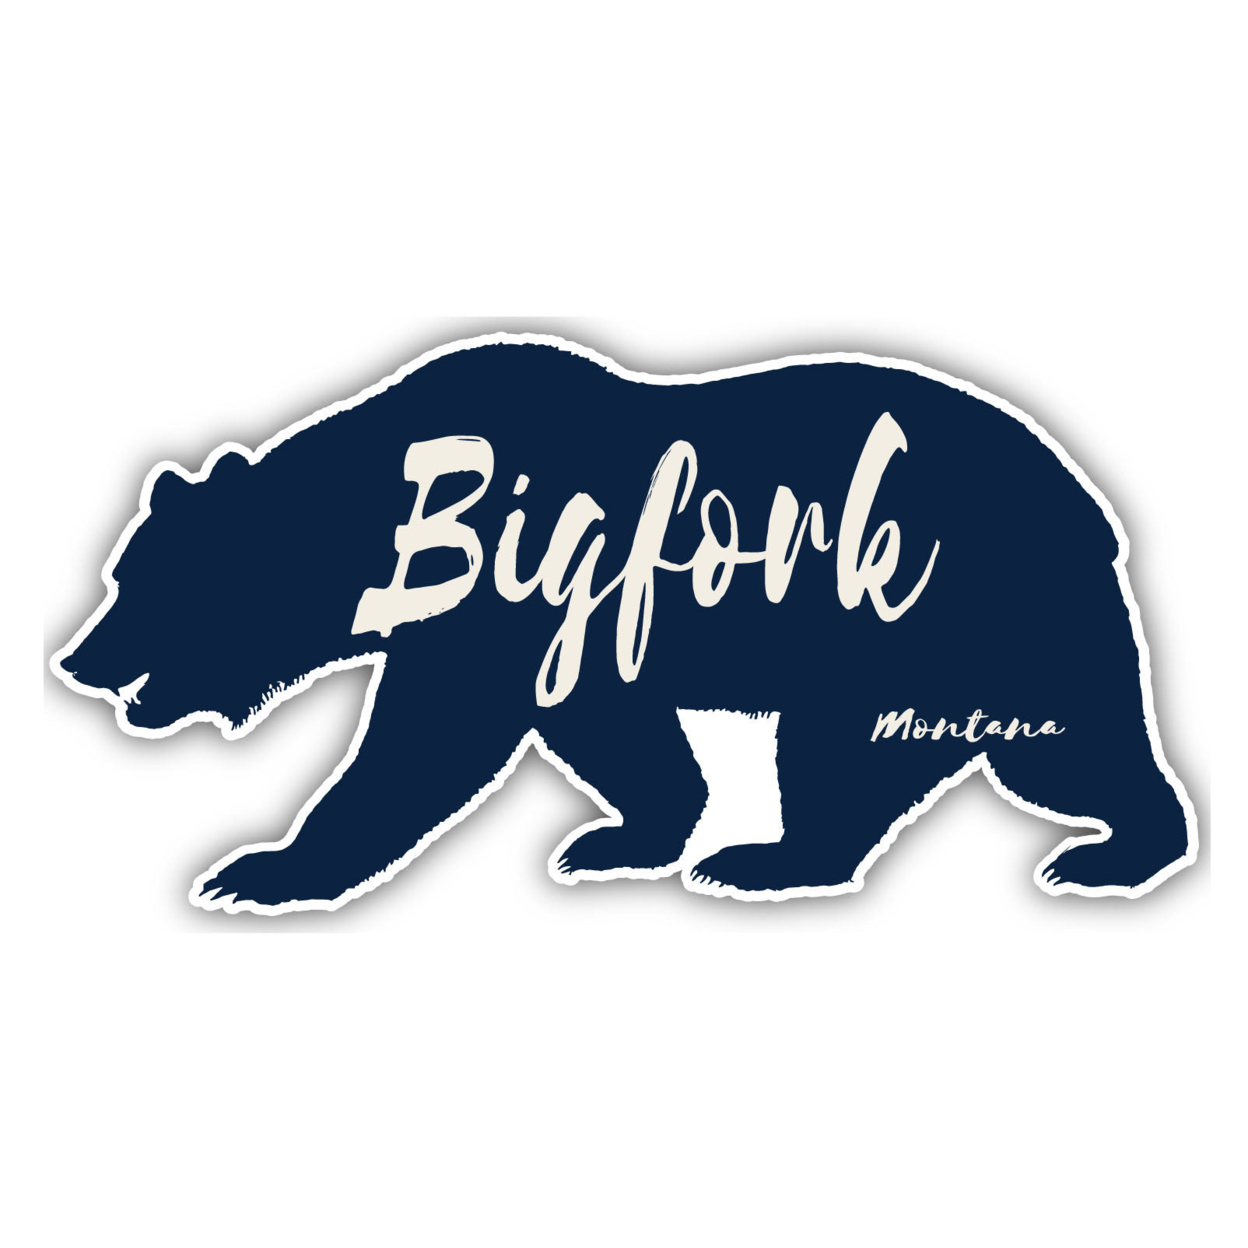 Bigfork Montana Souvenir Decorative Stickers (Choose Theme And Size) - Single Unit, 10-Inch, Great Outdoors